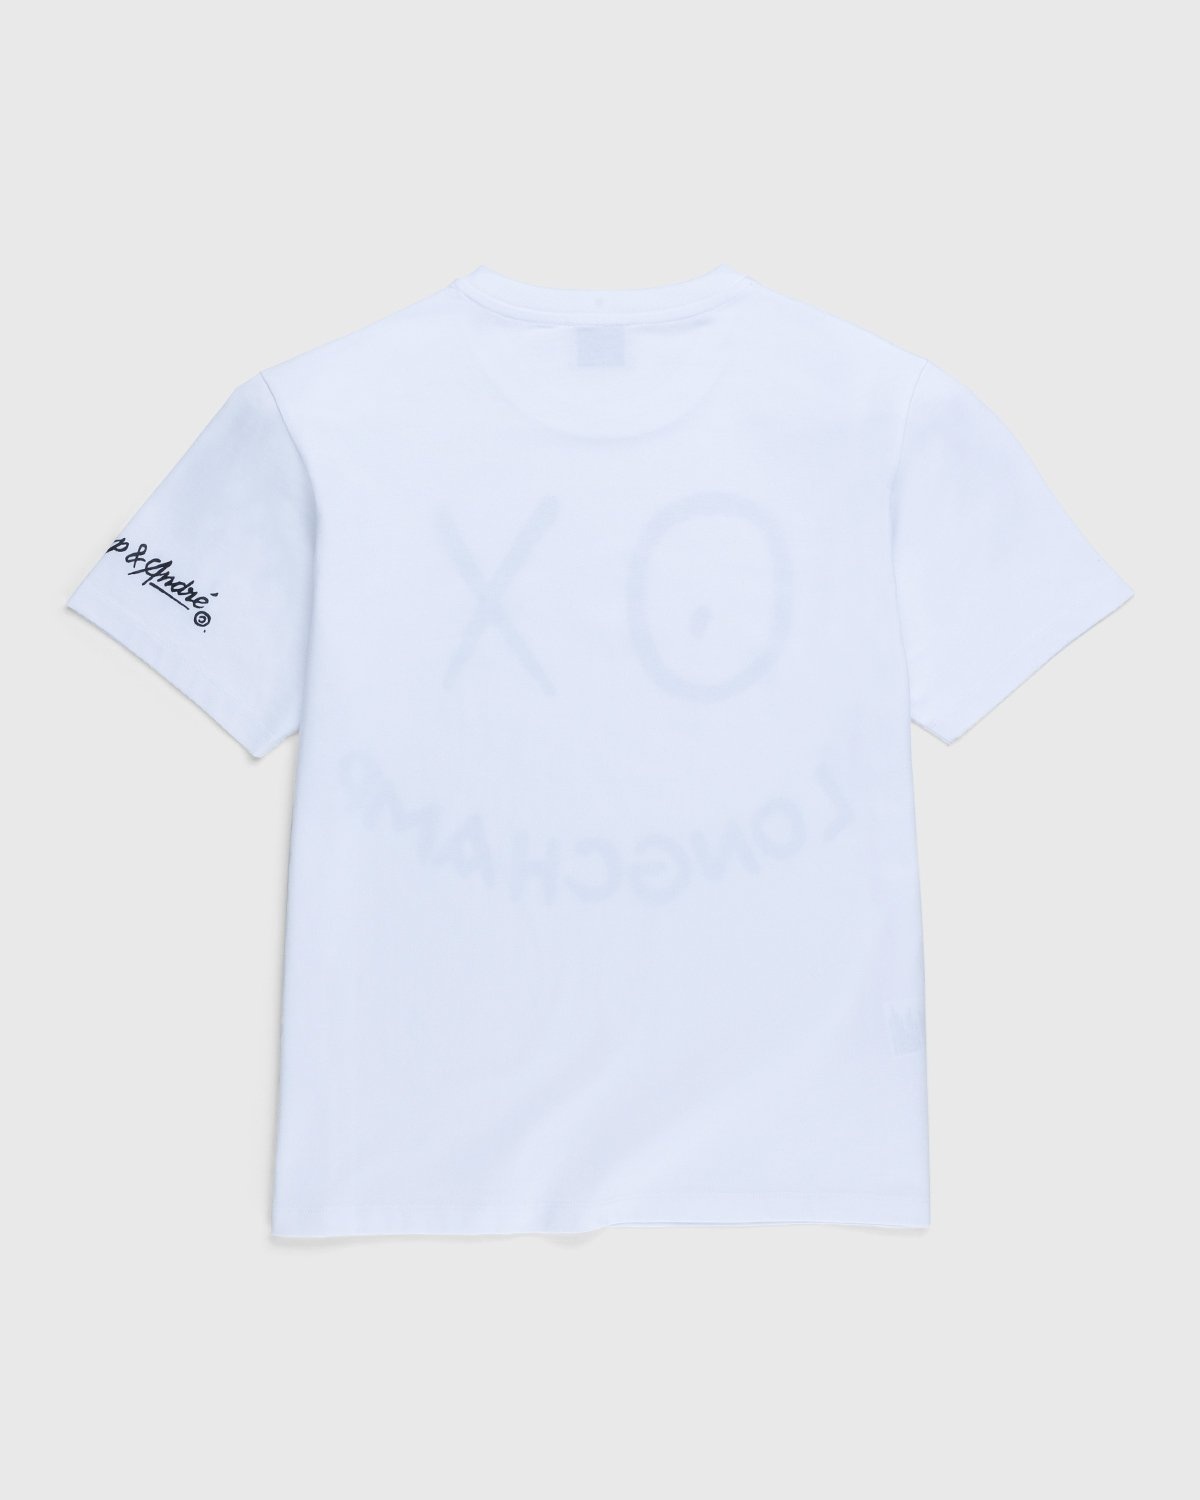 Longchamp x André Saraiva – T-Shirt White - T-Shirts - White - Image 3